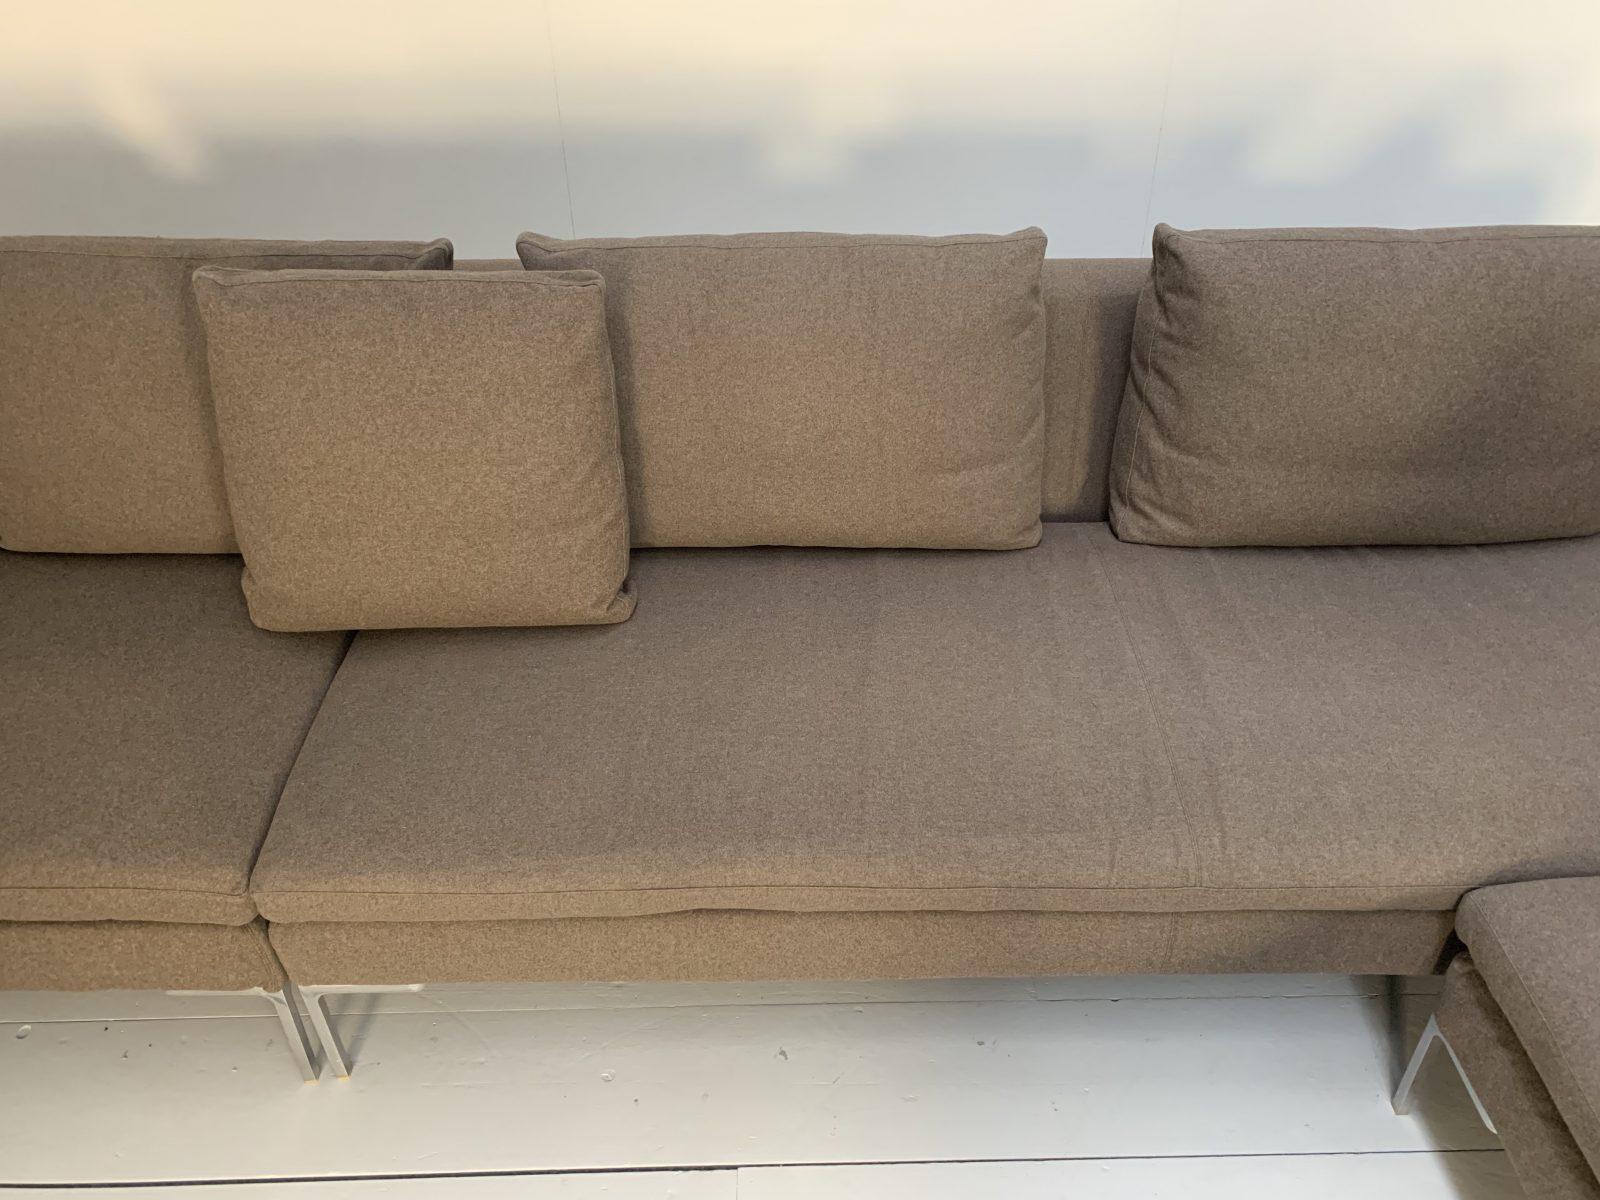 B&B Italia “Charles” L-Shape Sectional Sofa in Beige “Serra” Cashmere For Sale 4